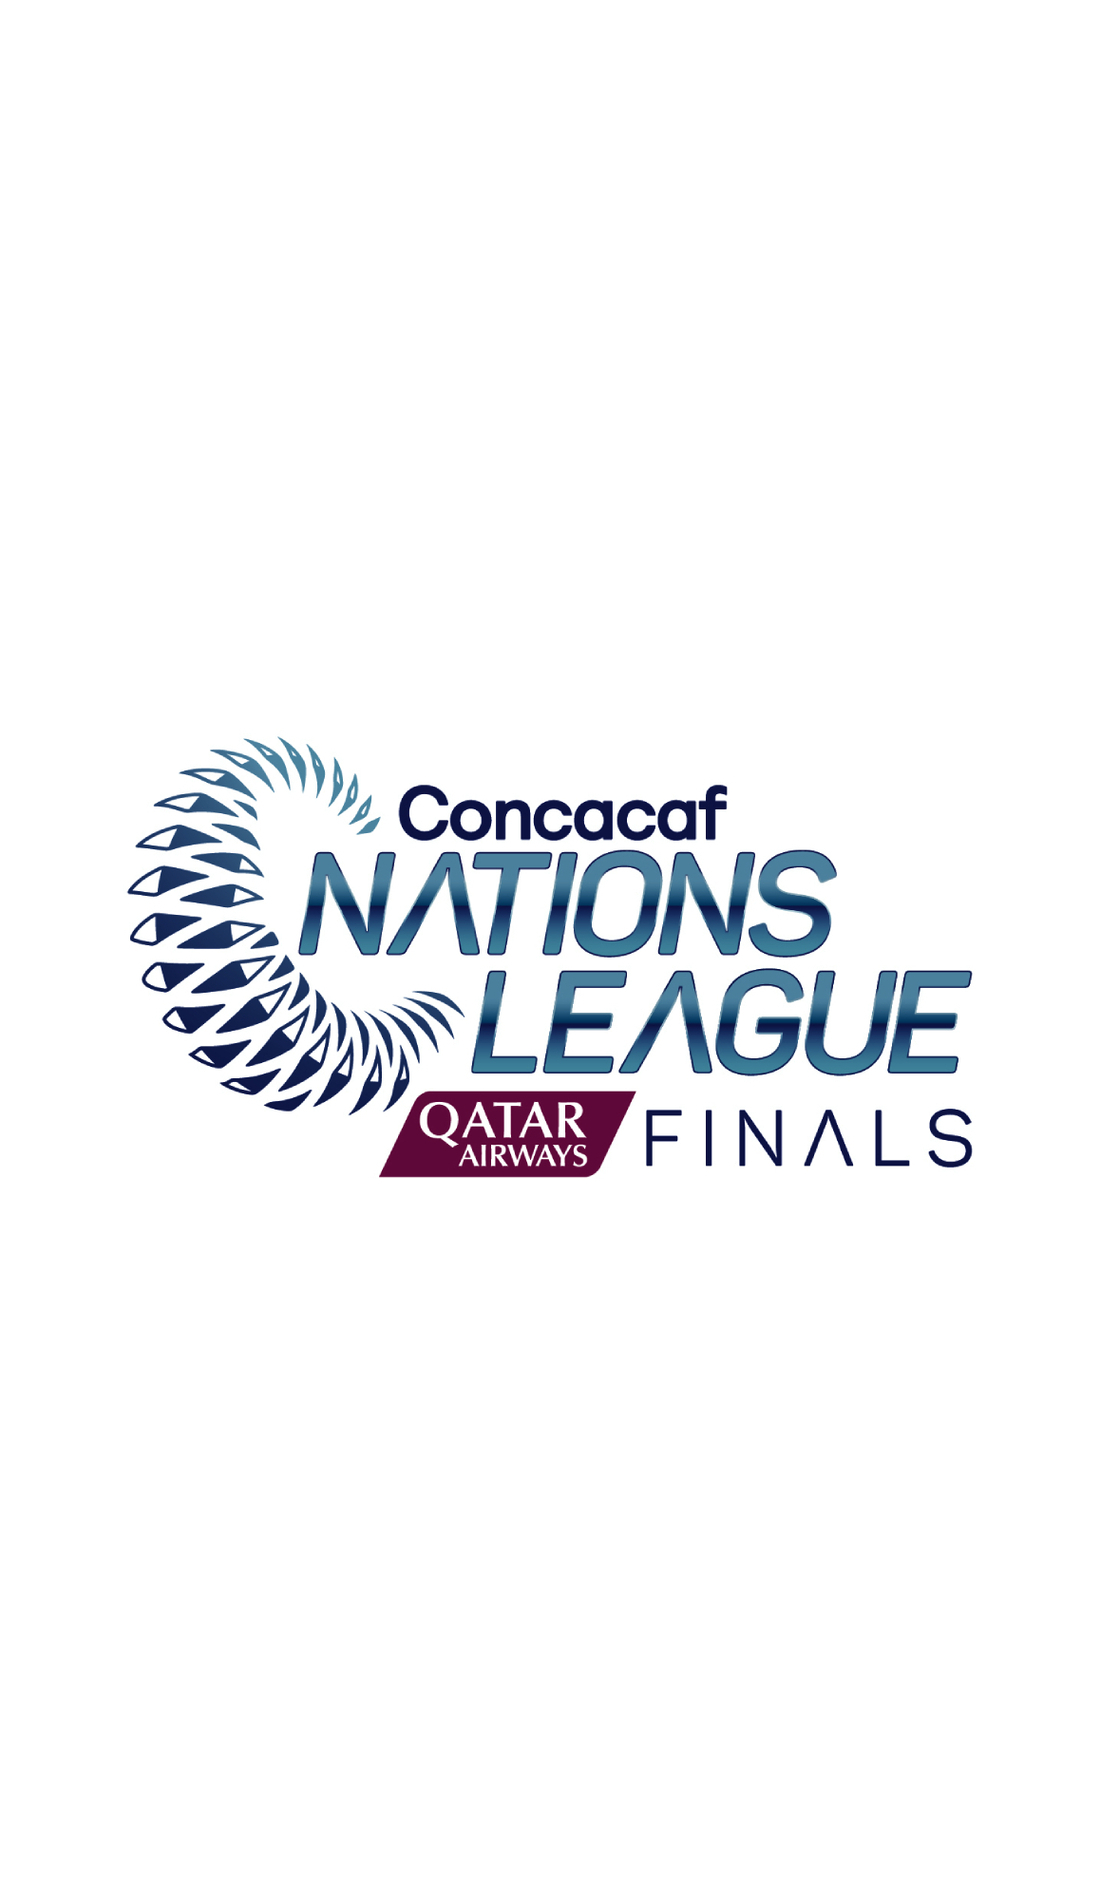 A Concacaf Nations League live event